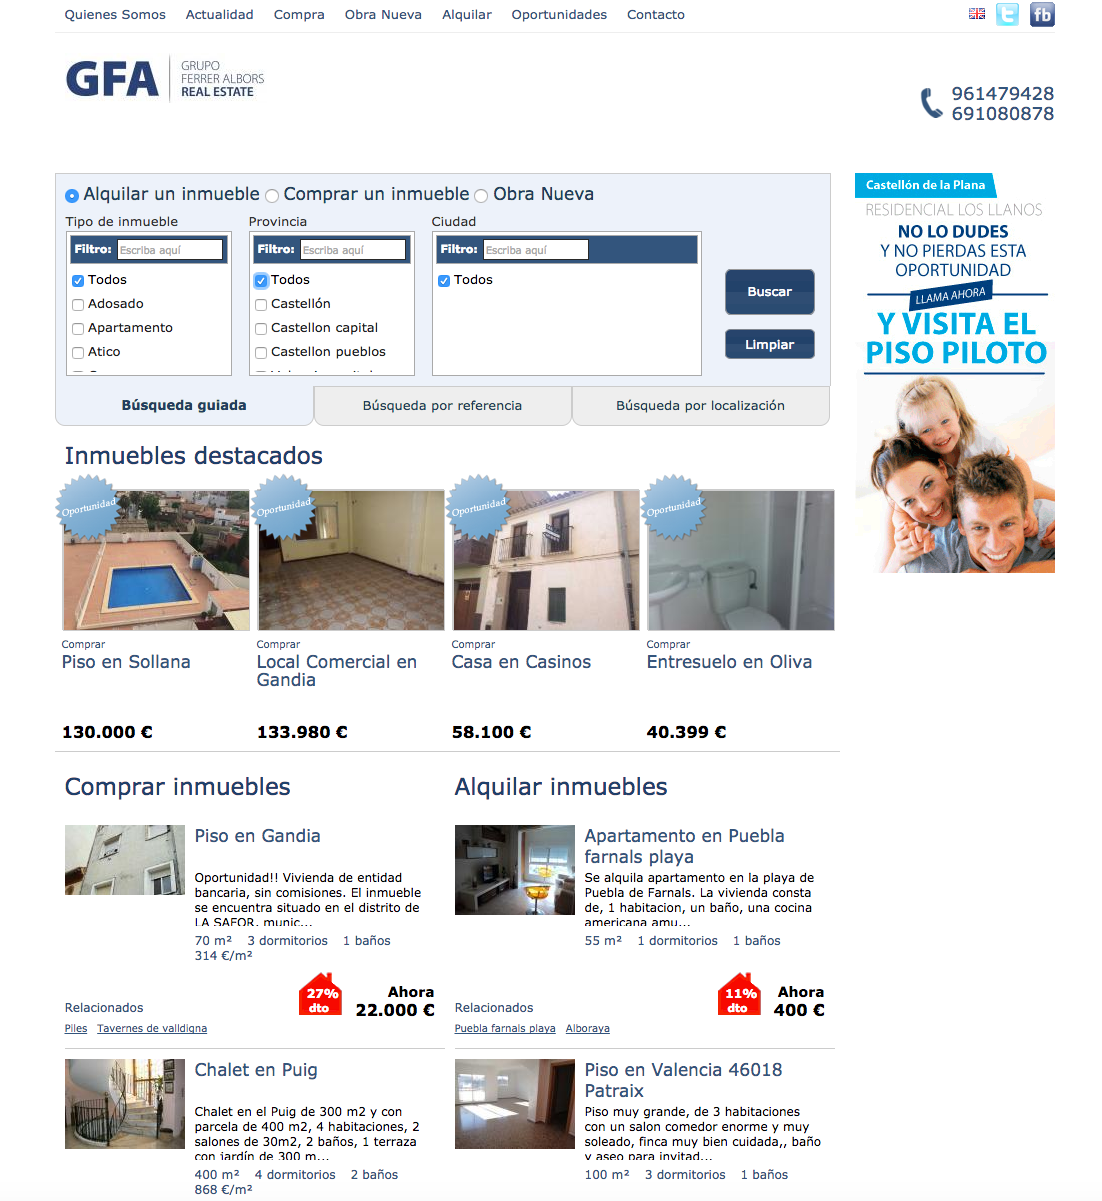 Diseño de web a medida GFA Grupo Ferrer Albors